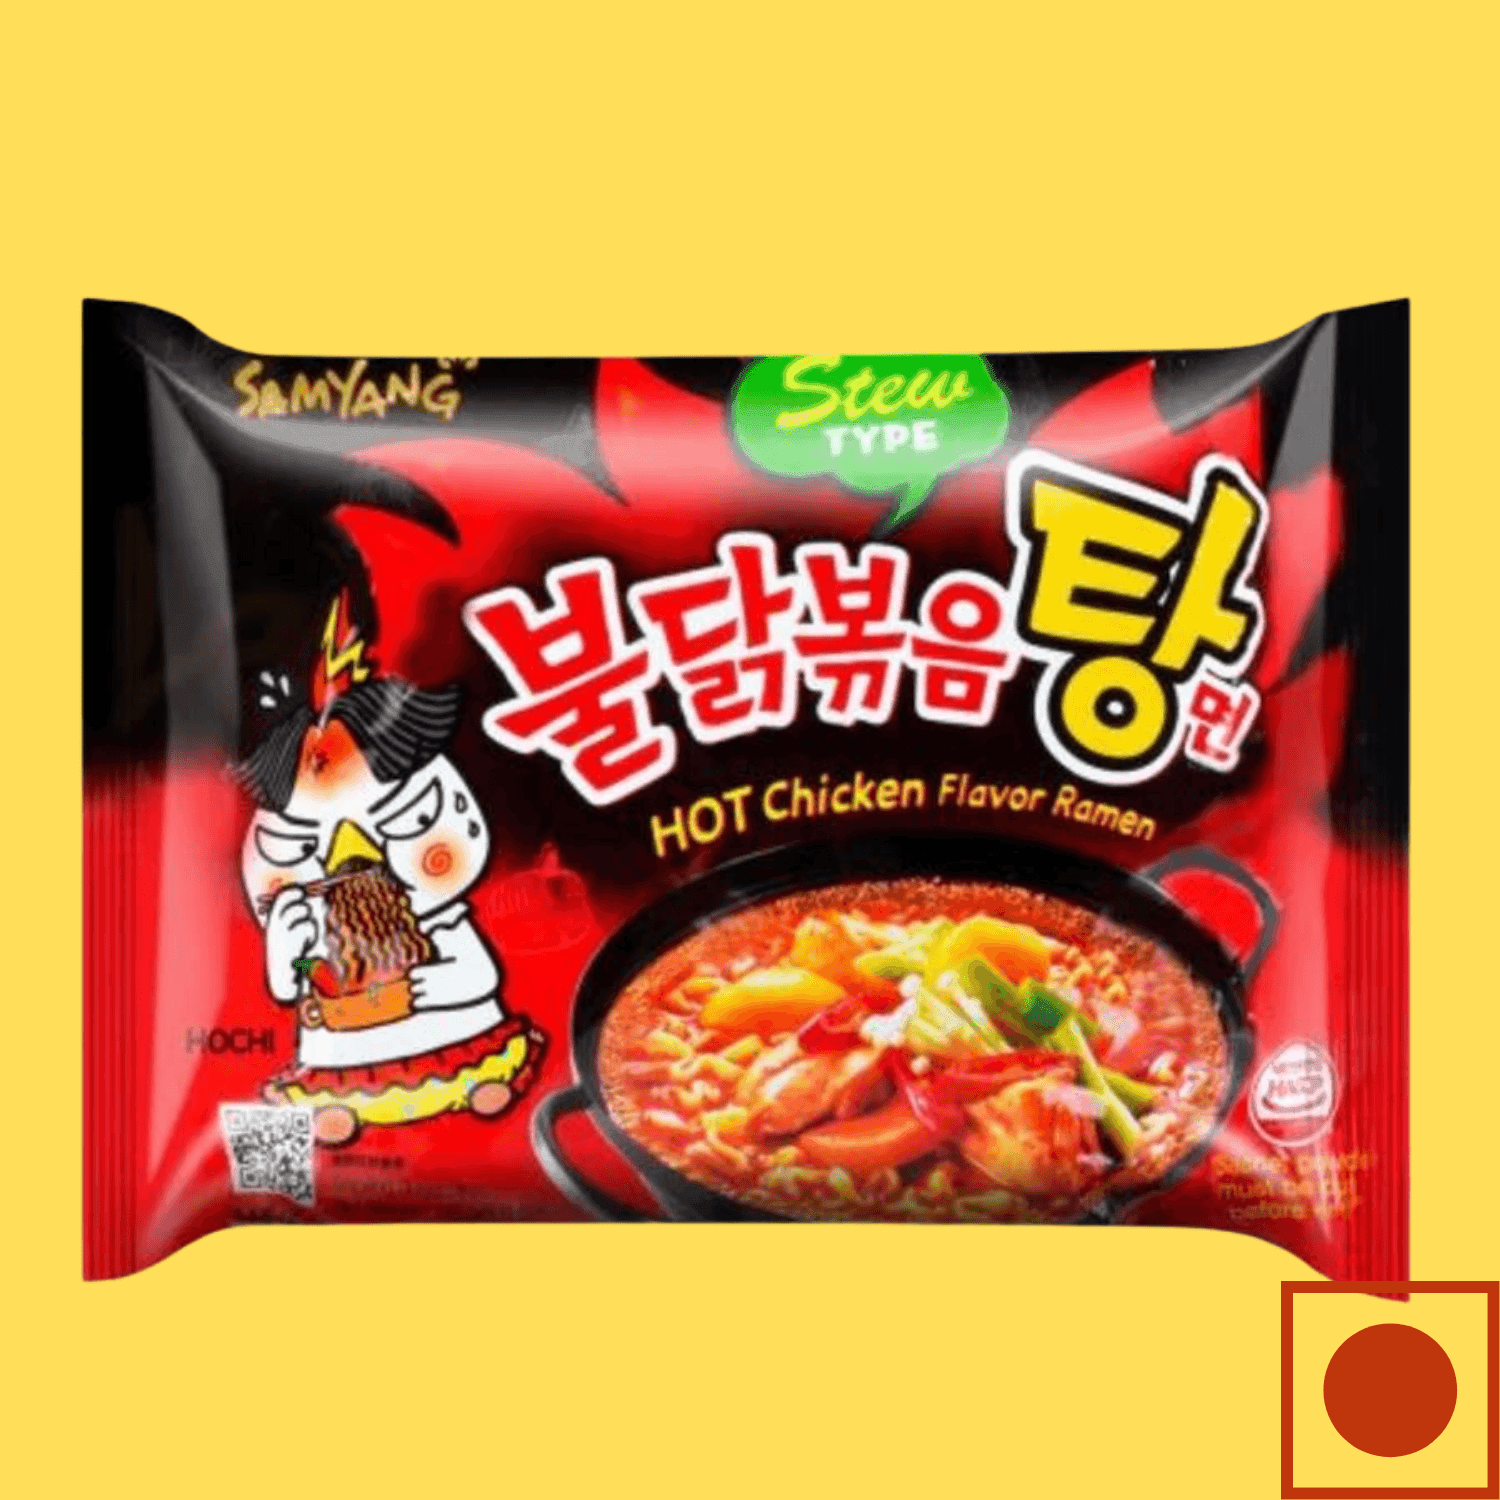 Samyang Hot Chicken Flavor Ramen Noodles Stew Type,140 g (IMPORTED) - Super 7 Mart